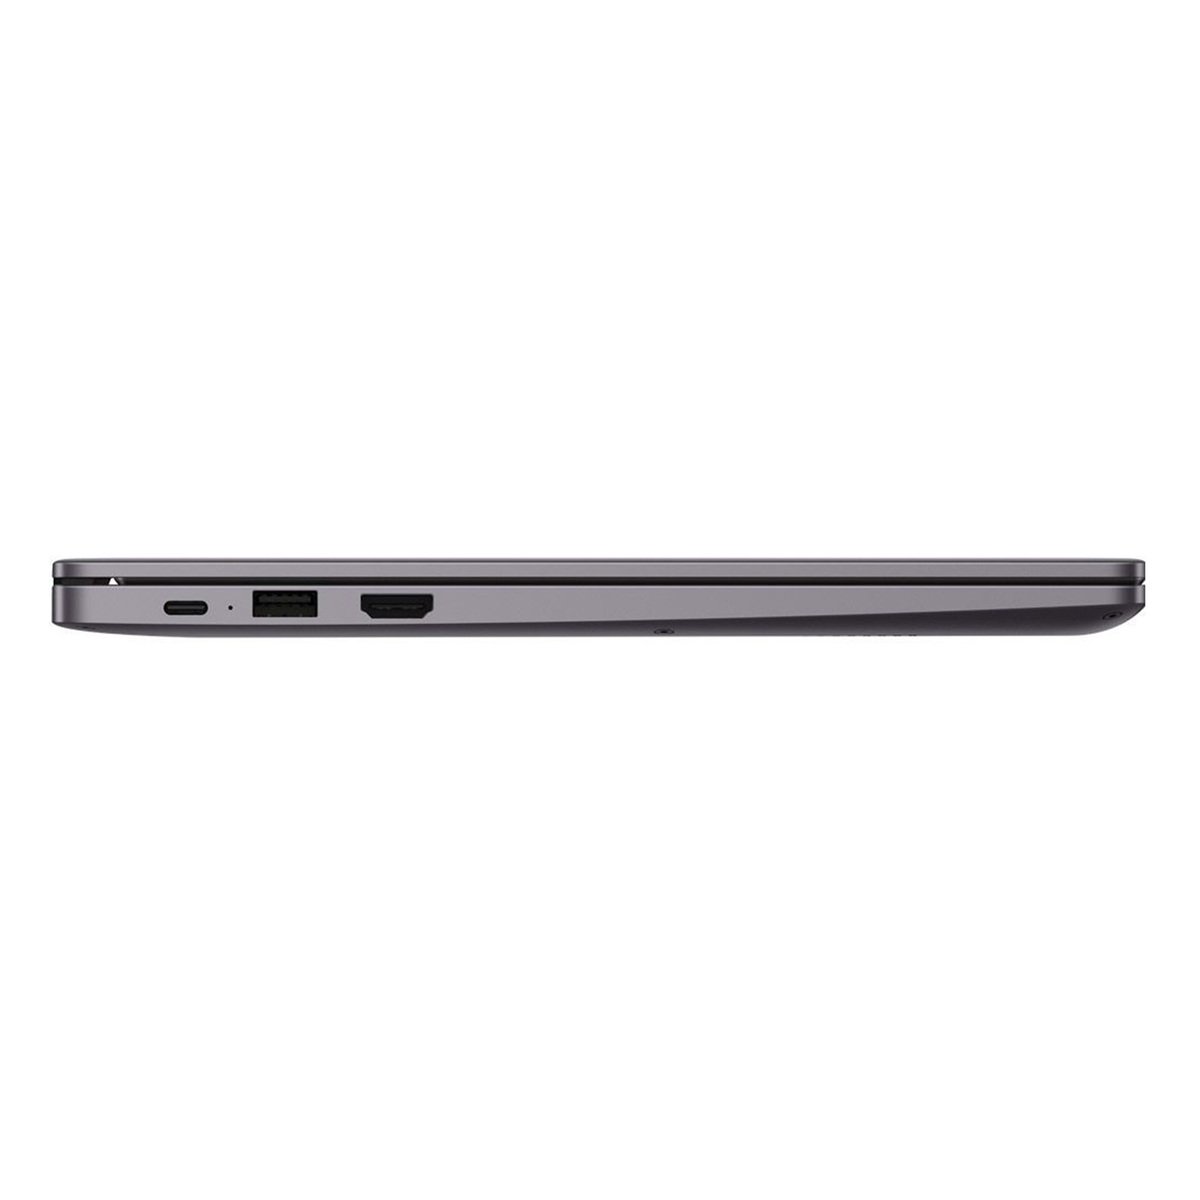 Huawei Matebook D14-WAP9AR R7 Space Grey